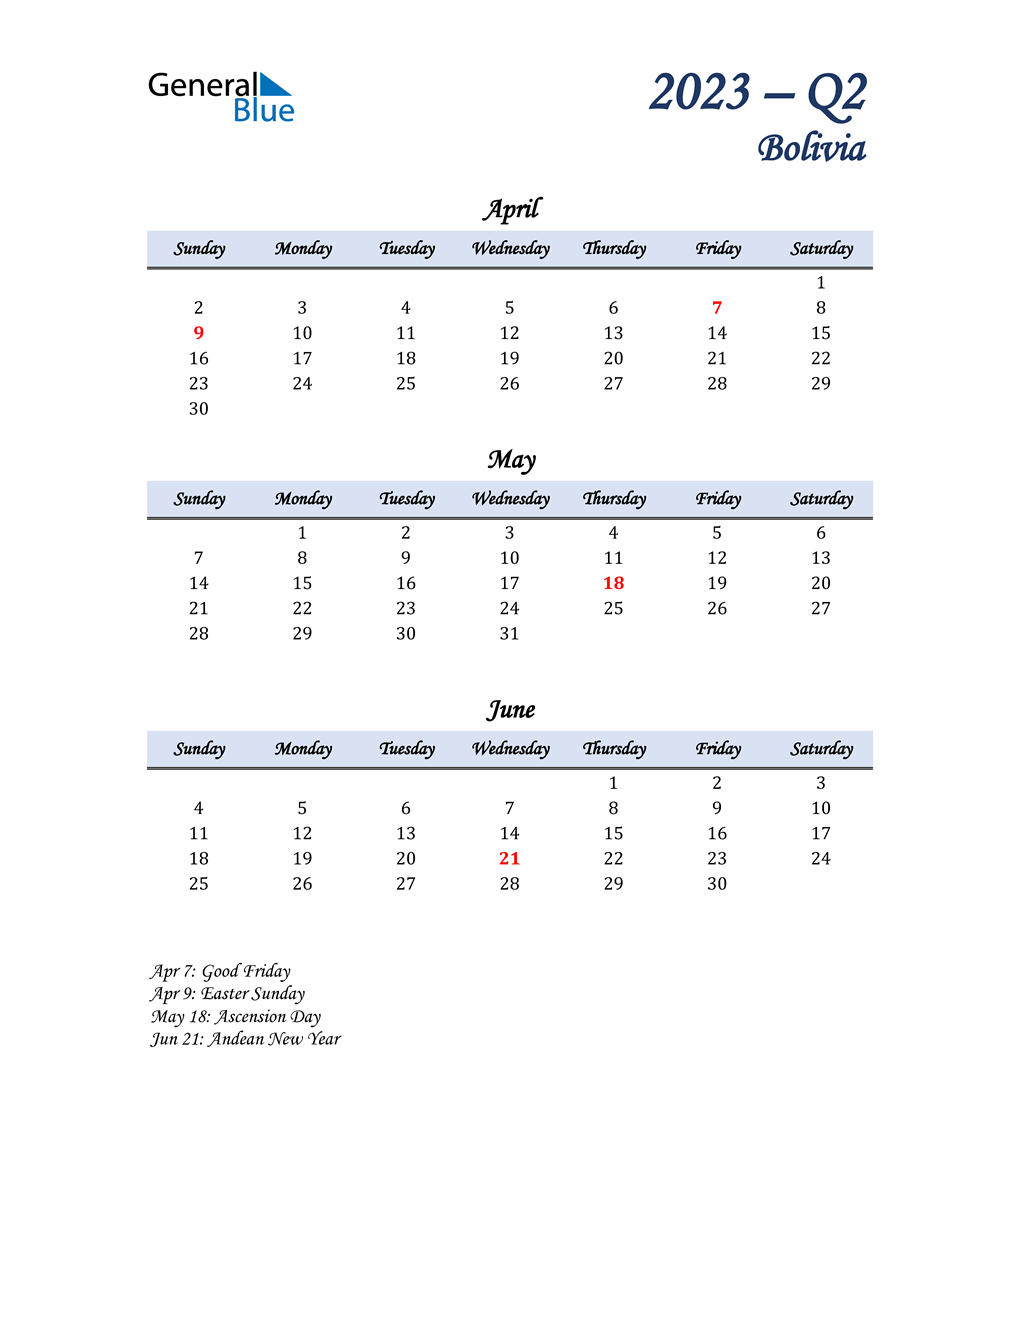  April, May, and June Calendar for Bolivia